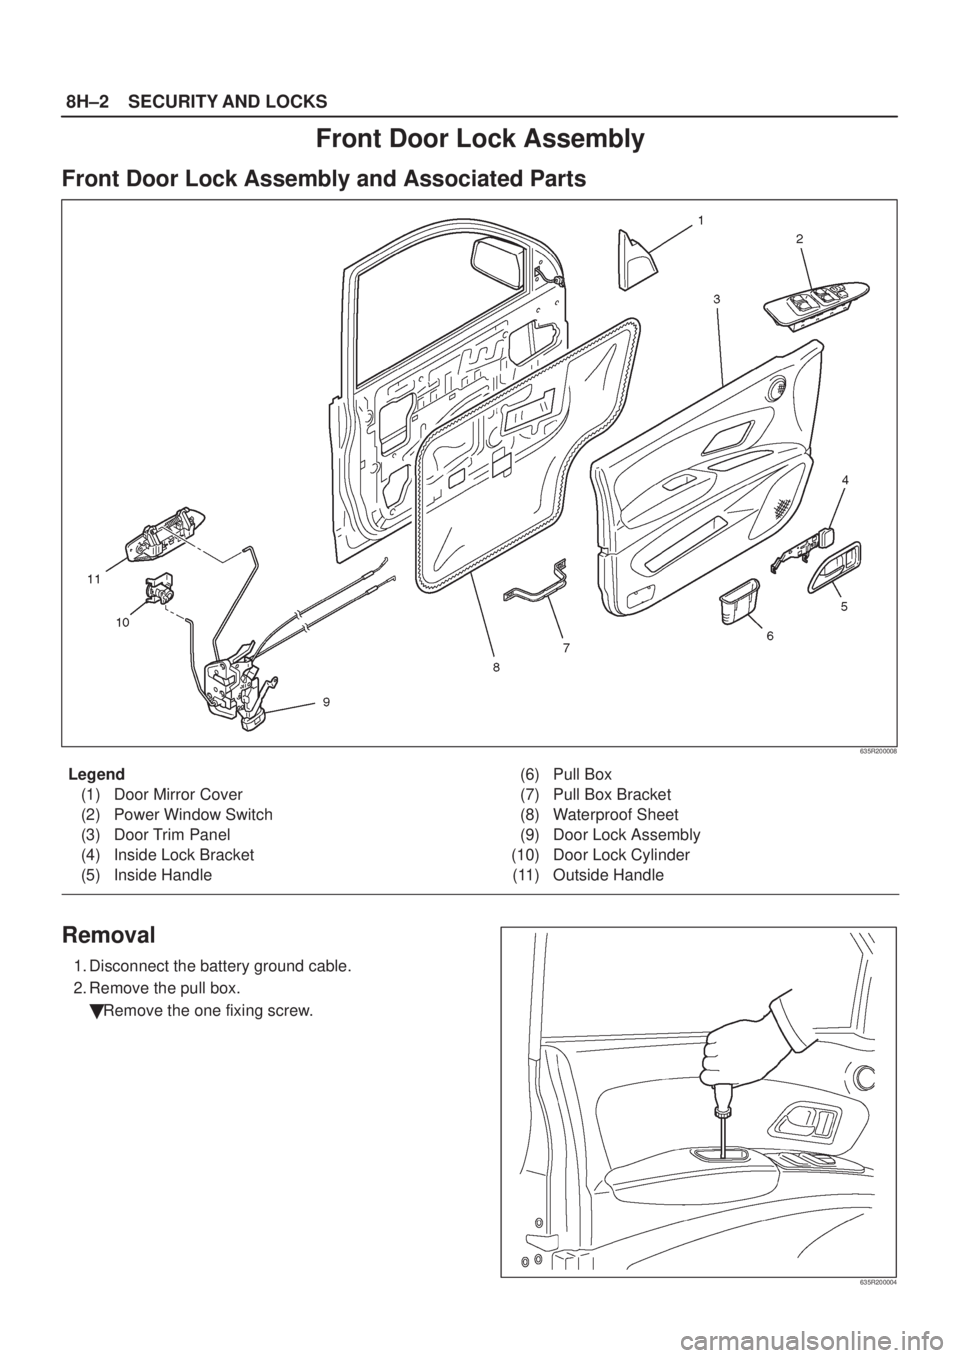 ISUZU AXIOM 2002  Service Repair Manual 8H±2SECURITY AND LOCKS
Front Door Lock Assembly
Front Door Lock Assembly and Associated Parts
635R200008
Legend
(1) Door Mirror Cover
(2) Power Window Switch
(3) Door Trim Panel
(4) Inside Lock Brack